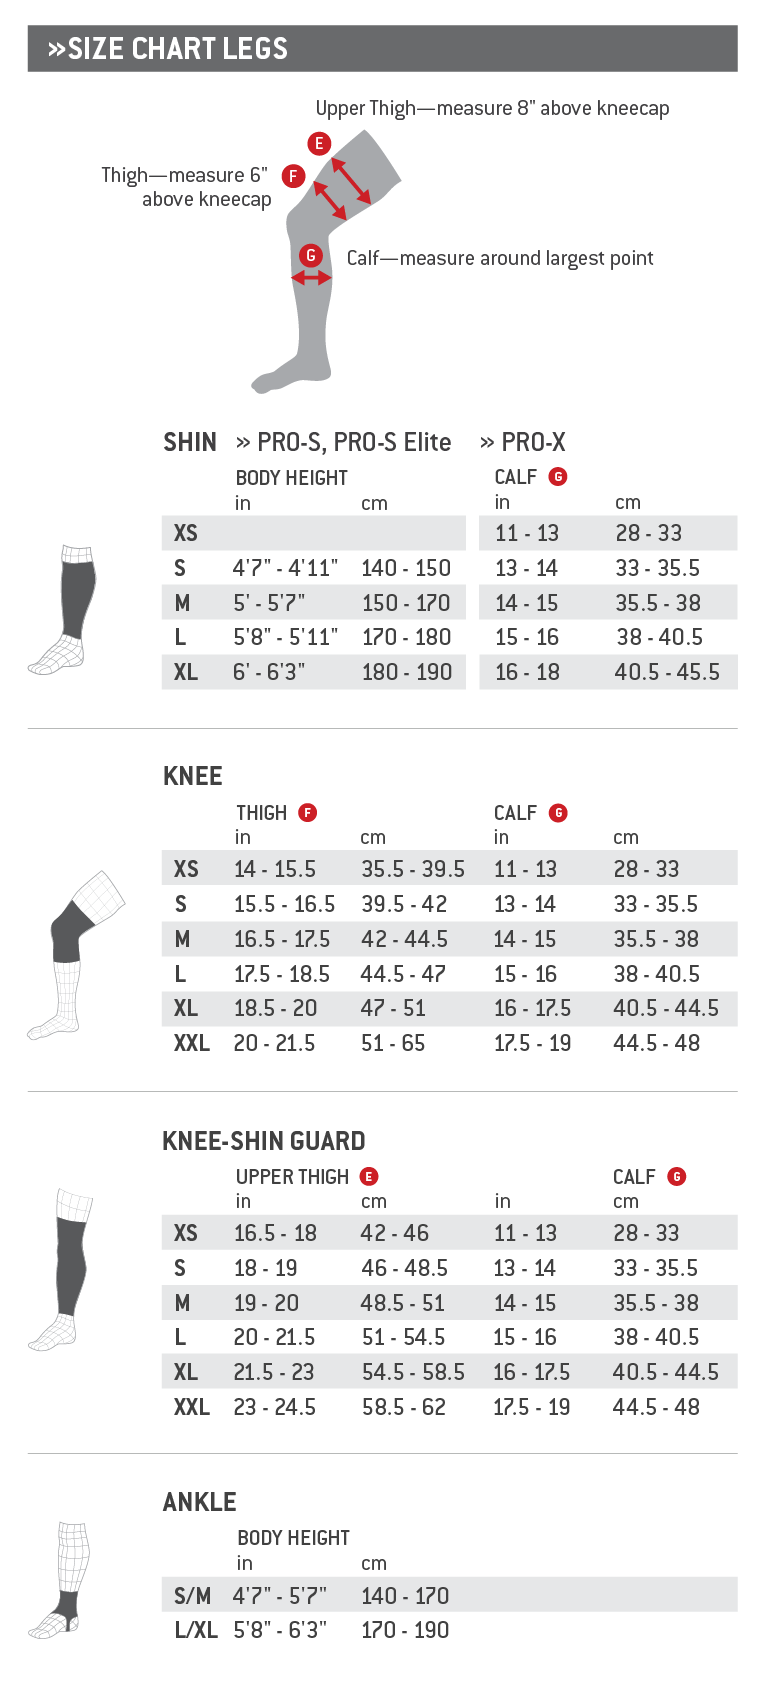 G-Form Pro G Board and Ski Compression Shorts